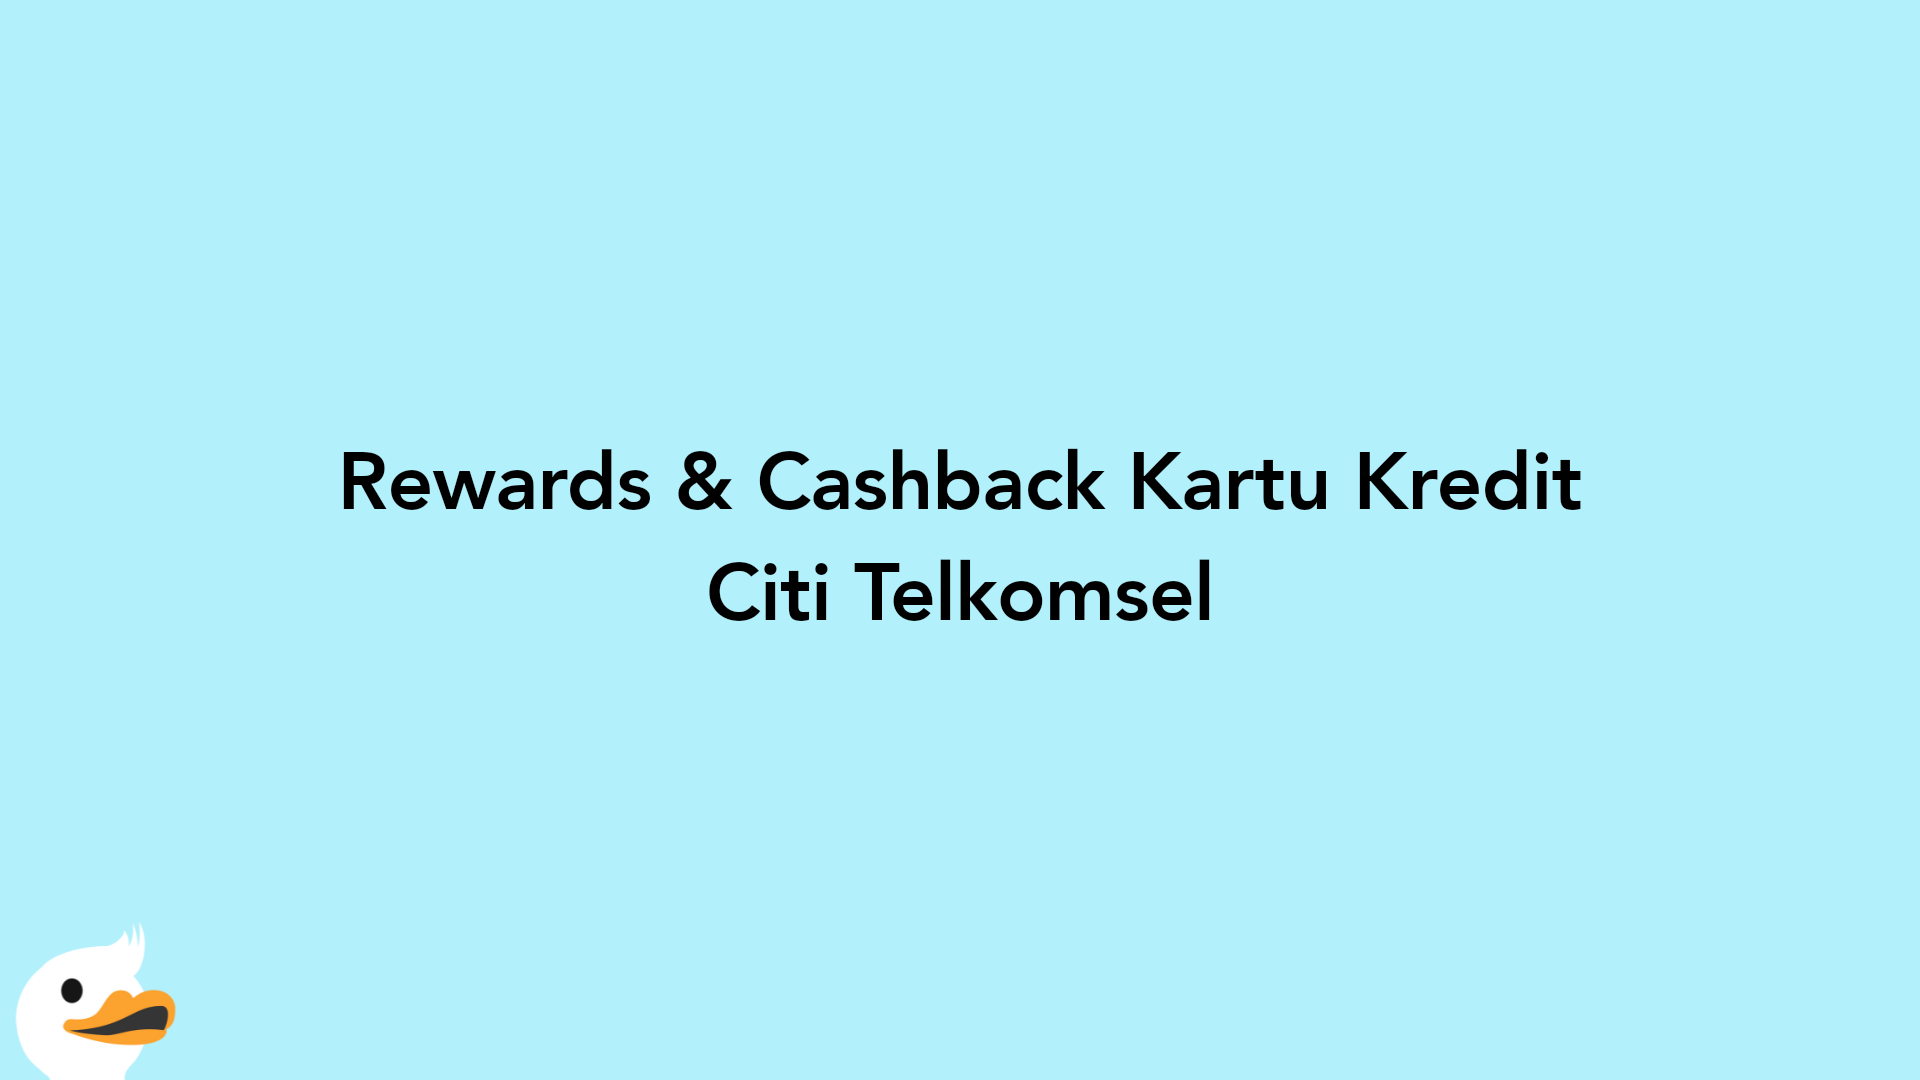 Rewards & Cashback Kartu Kredit Citi Telkomsel